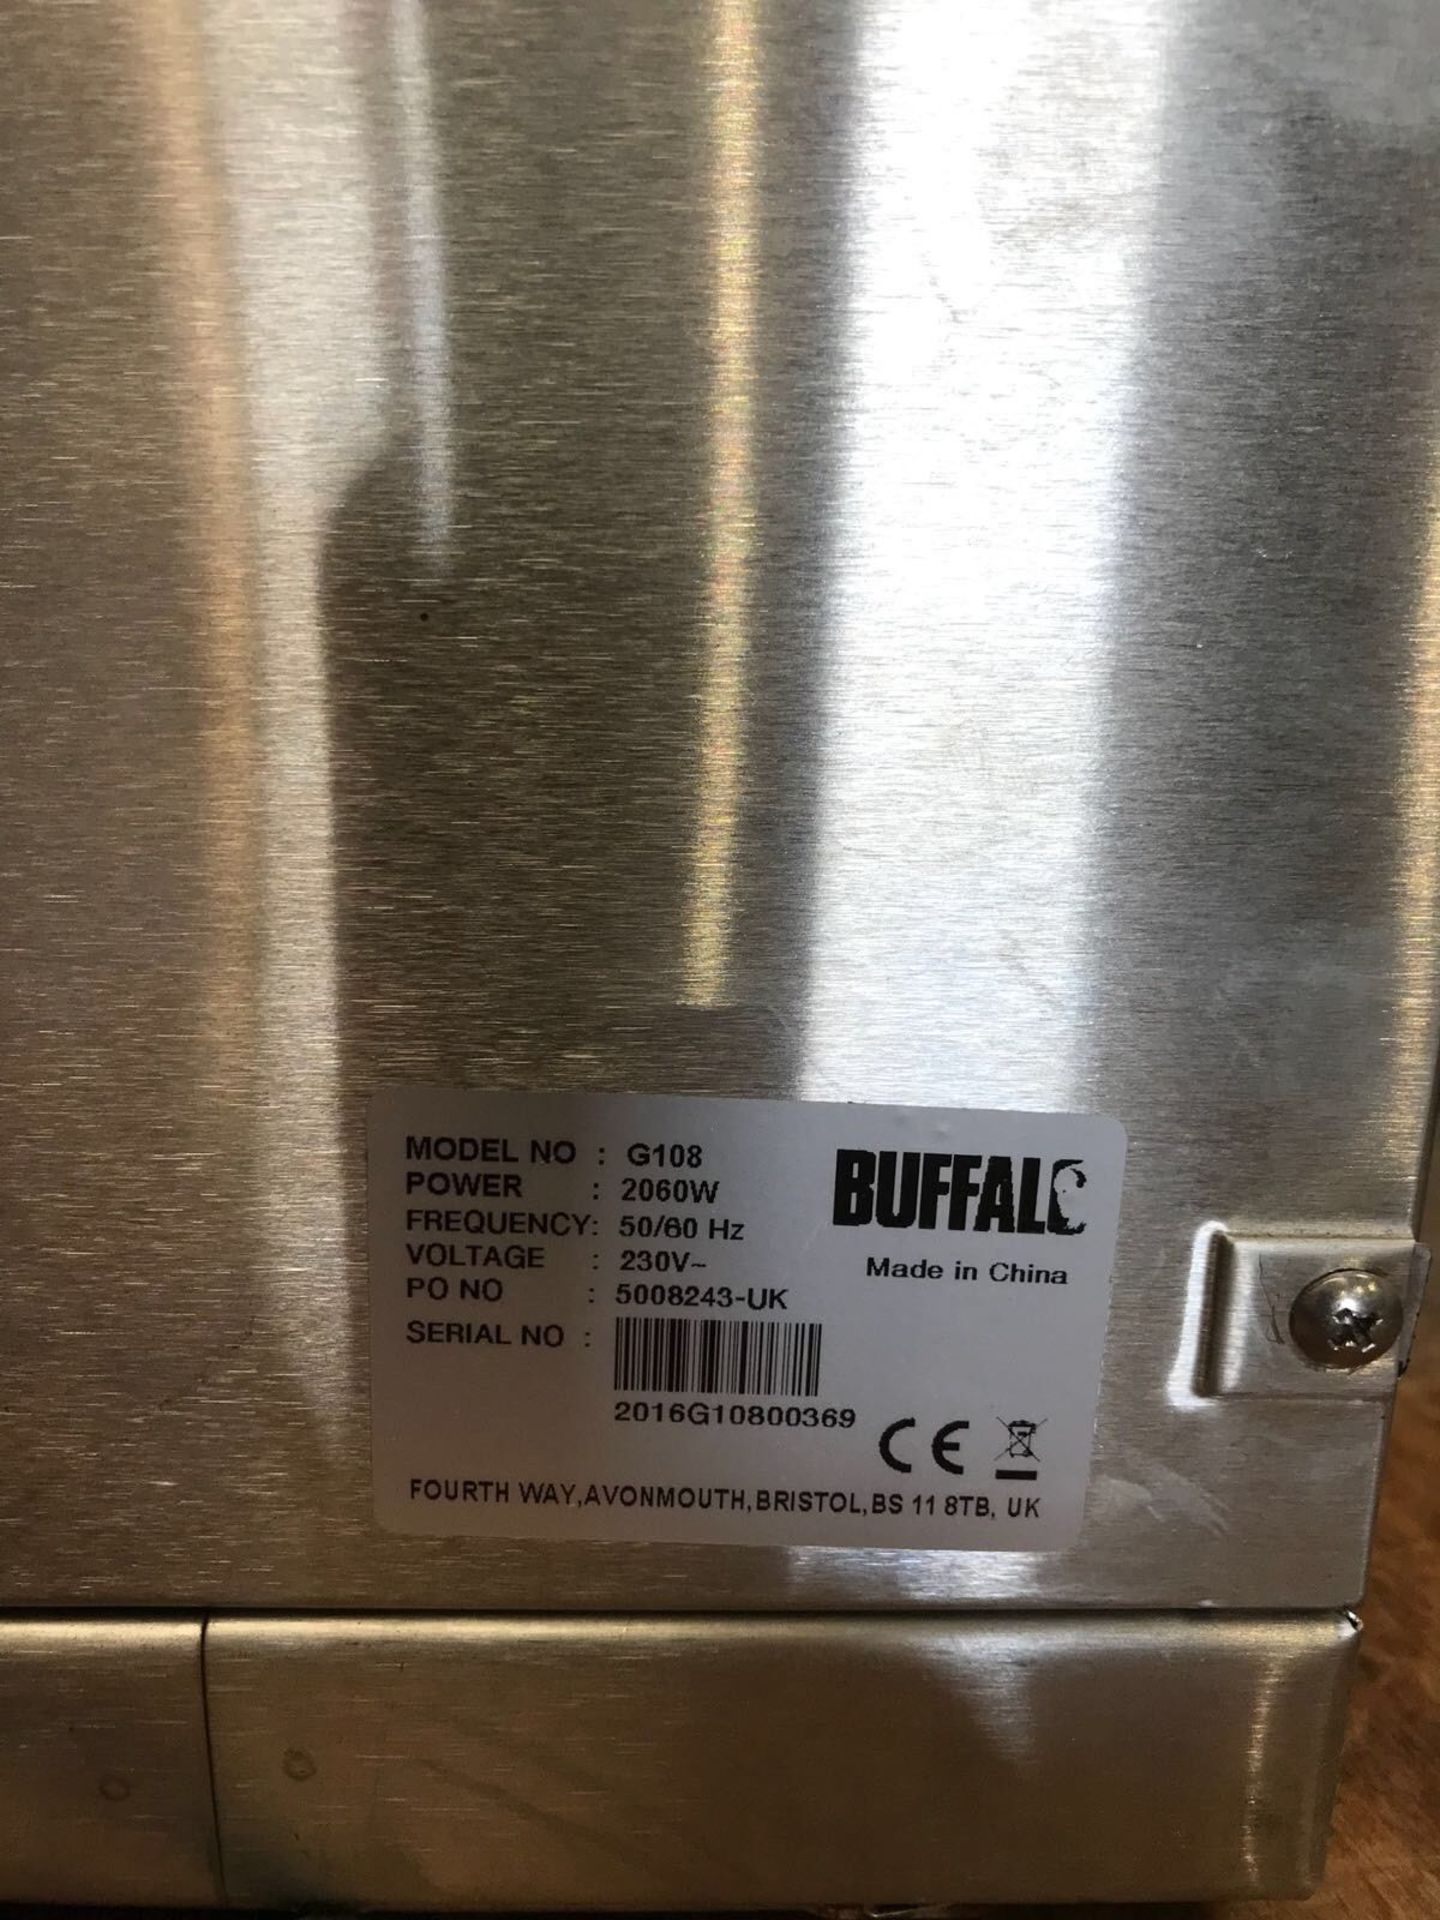 Buffalo Filter Coffee Machine - Image 3 of 3